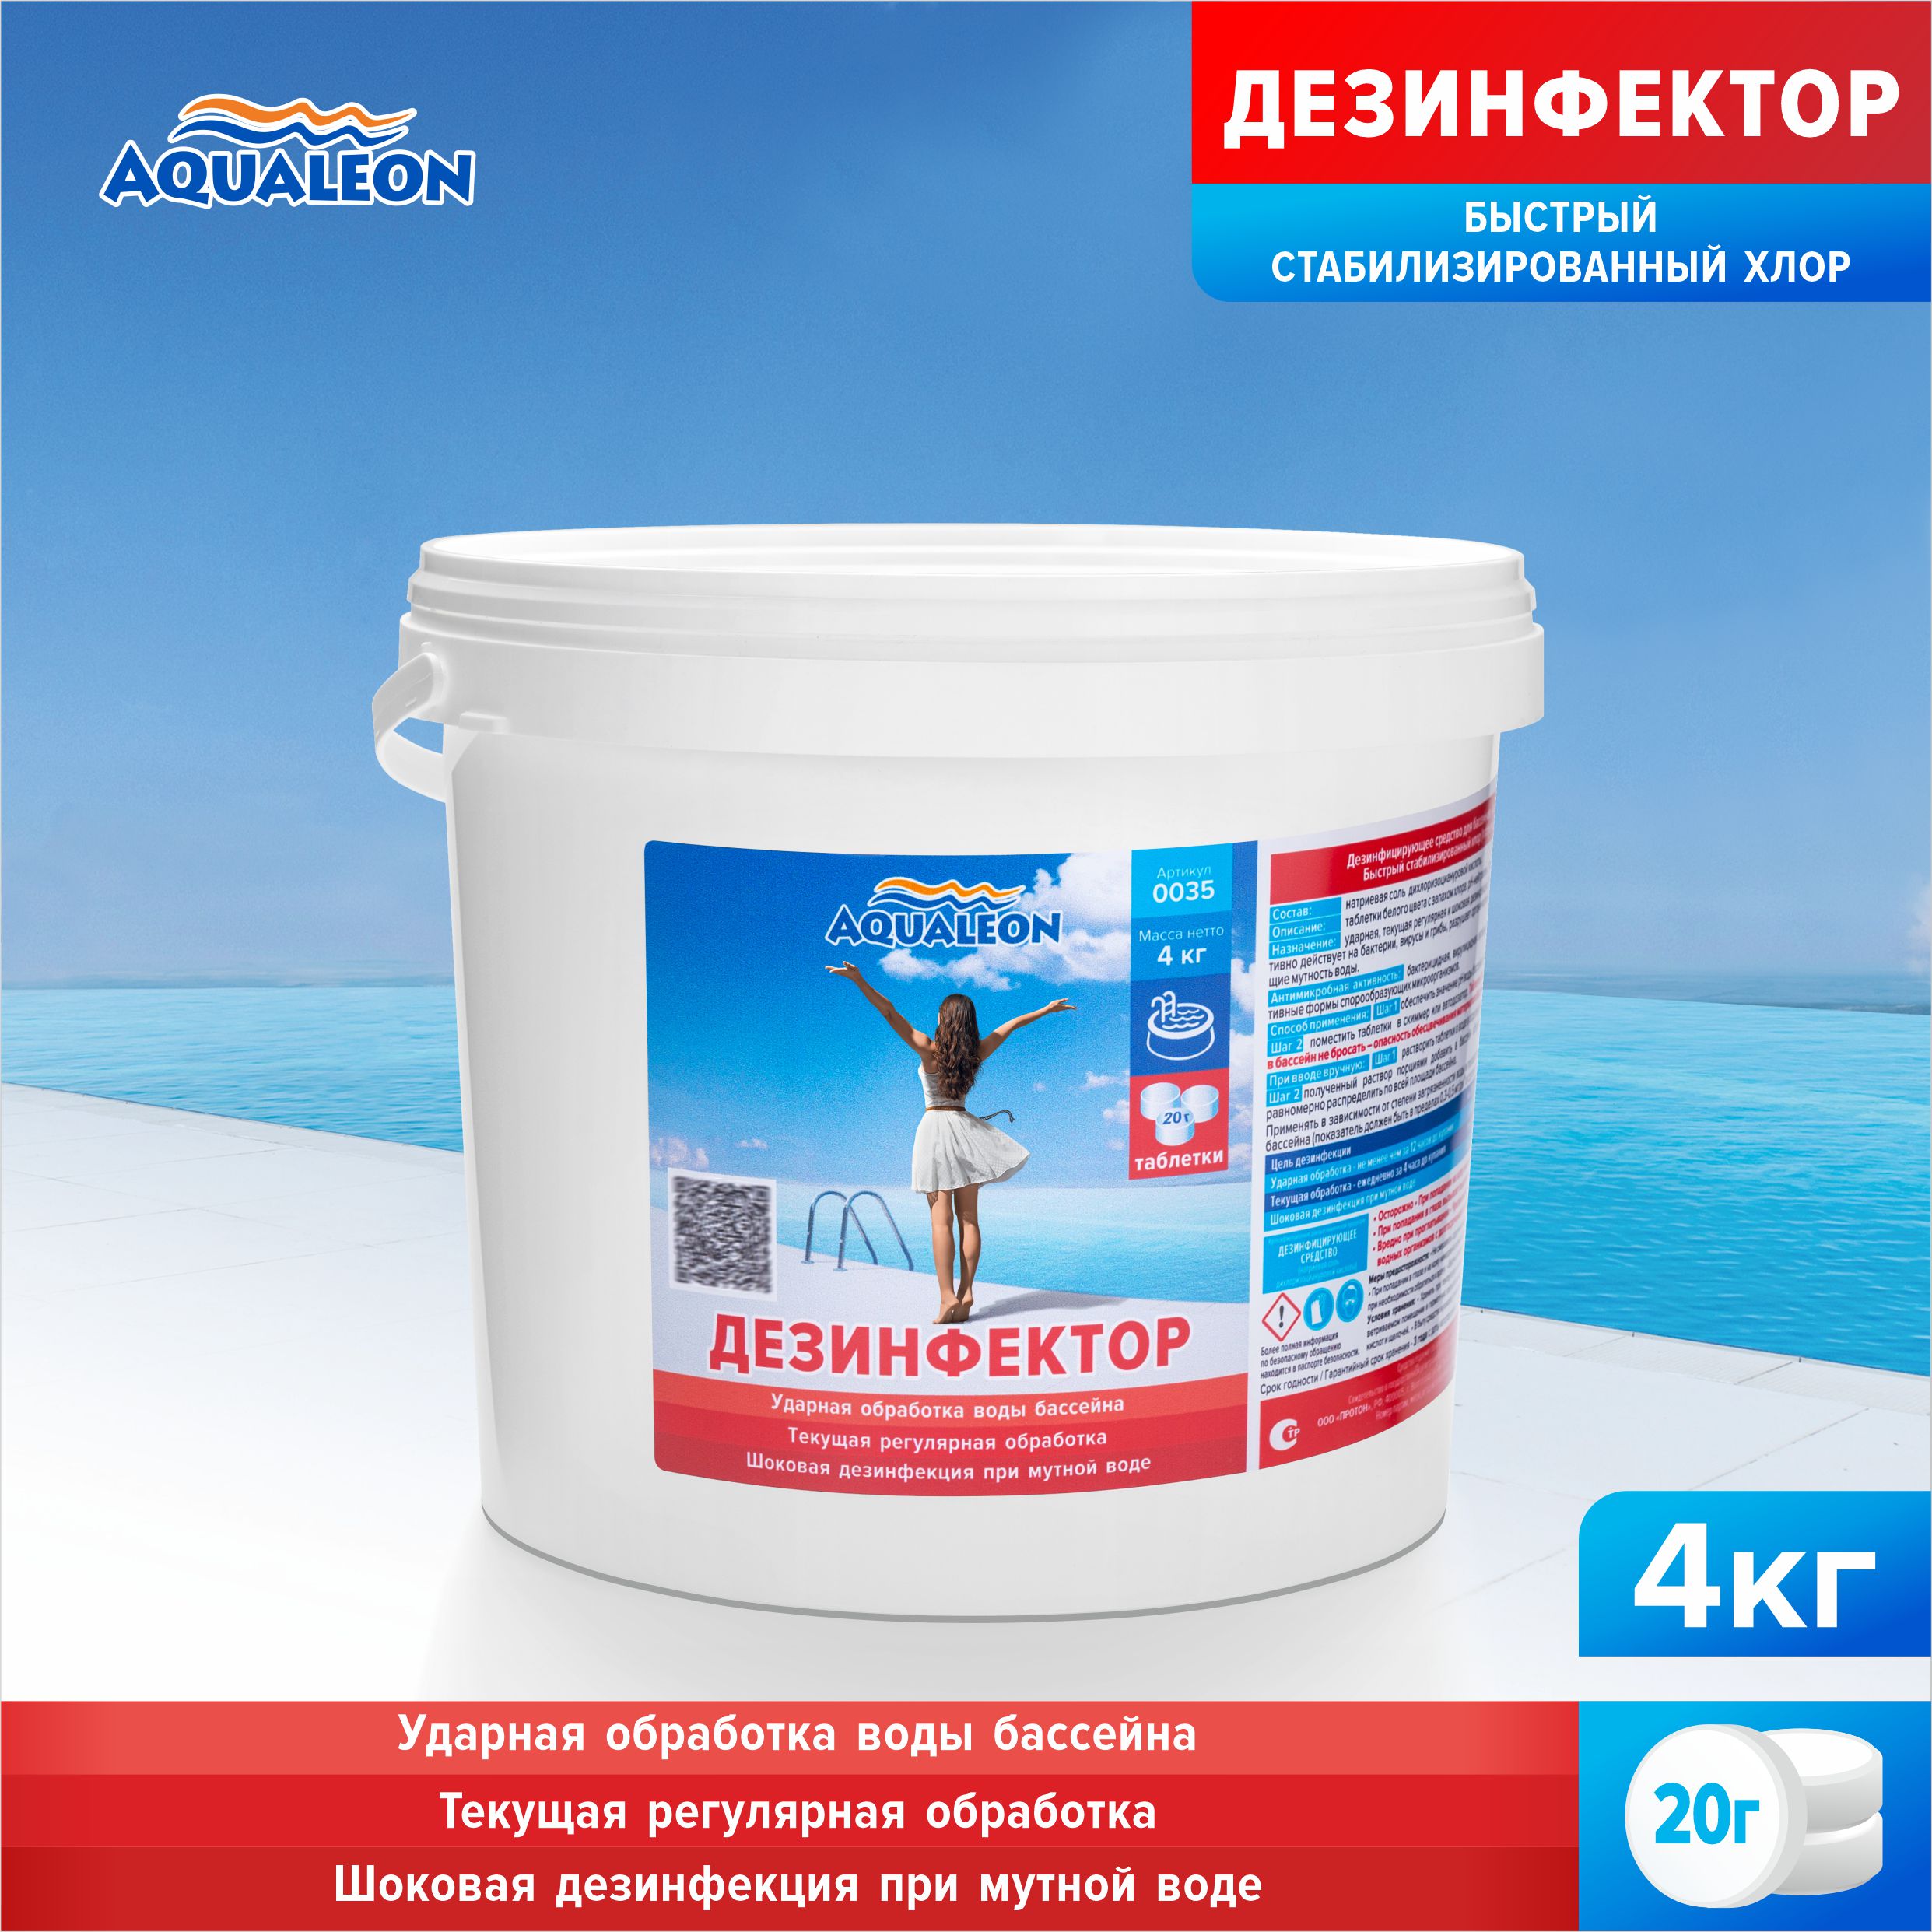 Быстрый хлор для бассейна (БСХ) Aqualeon таблетки по 20 гр., 4 кг